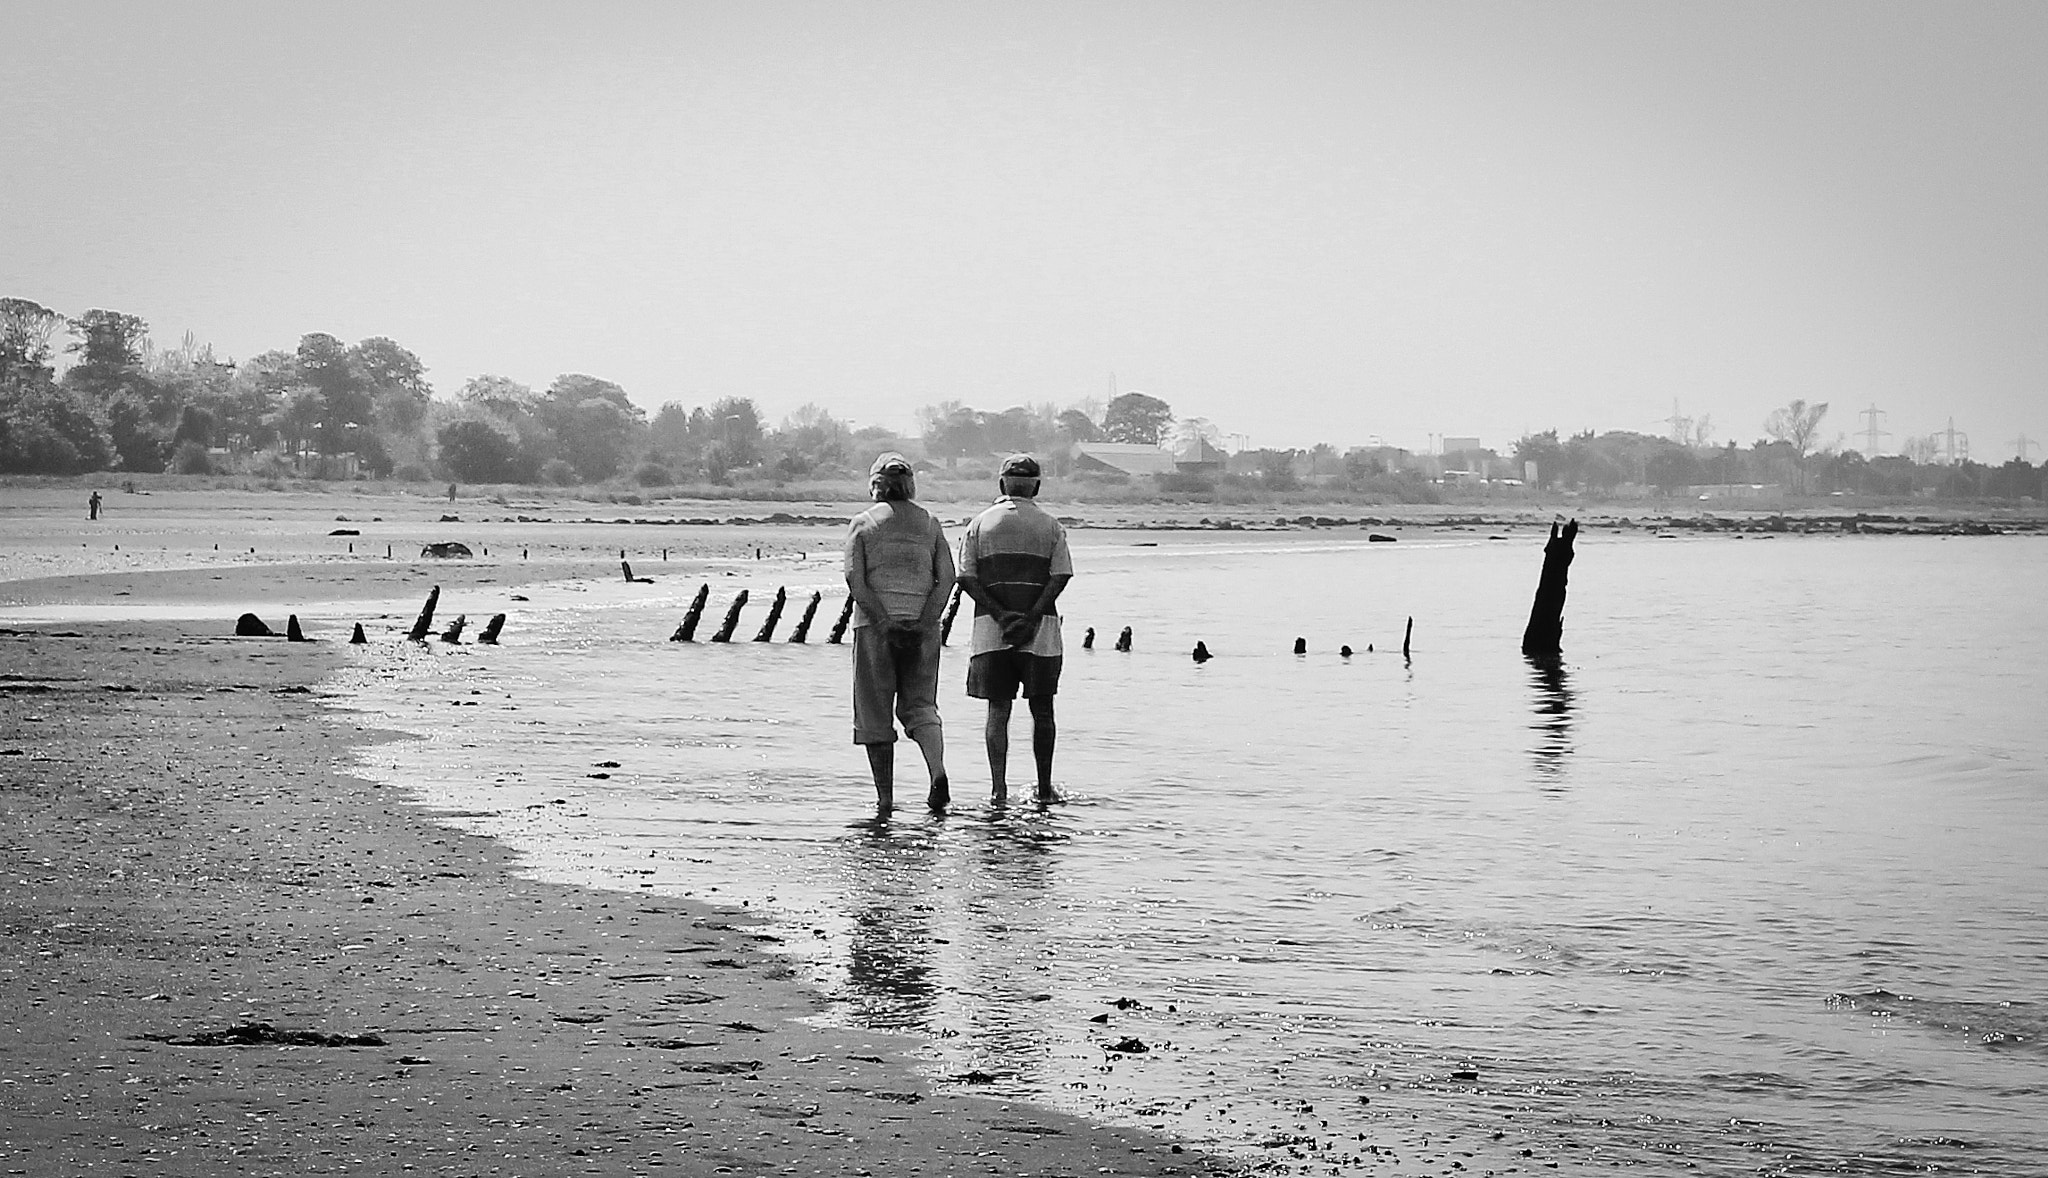 Older couple walking on beach